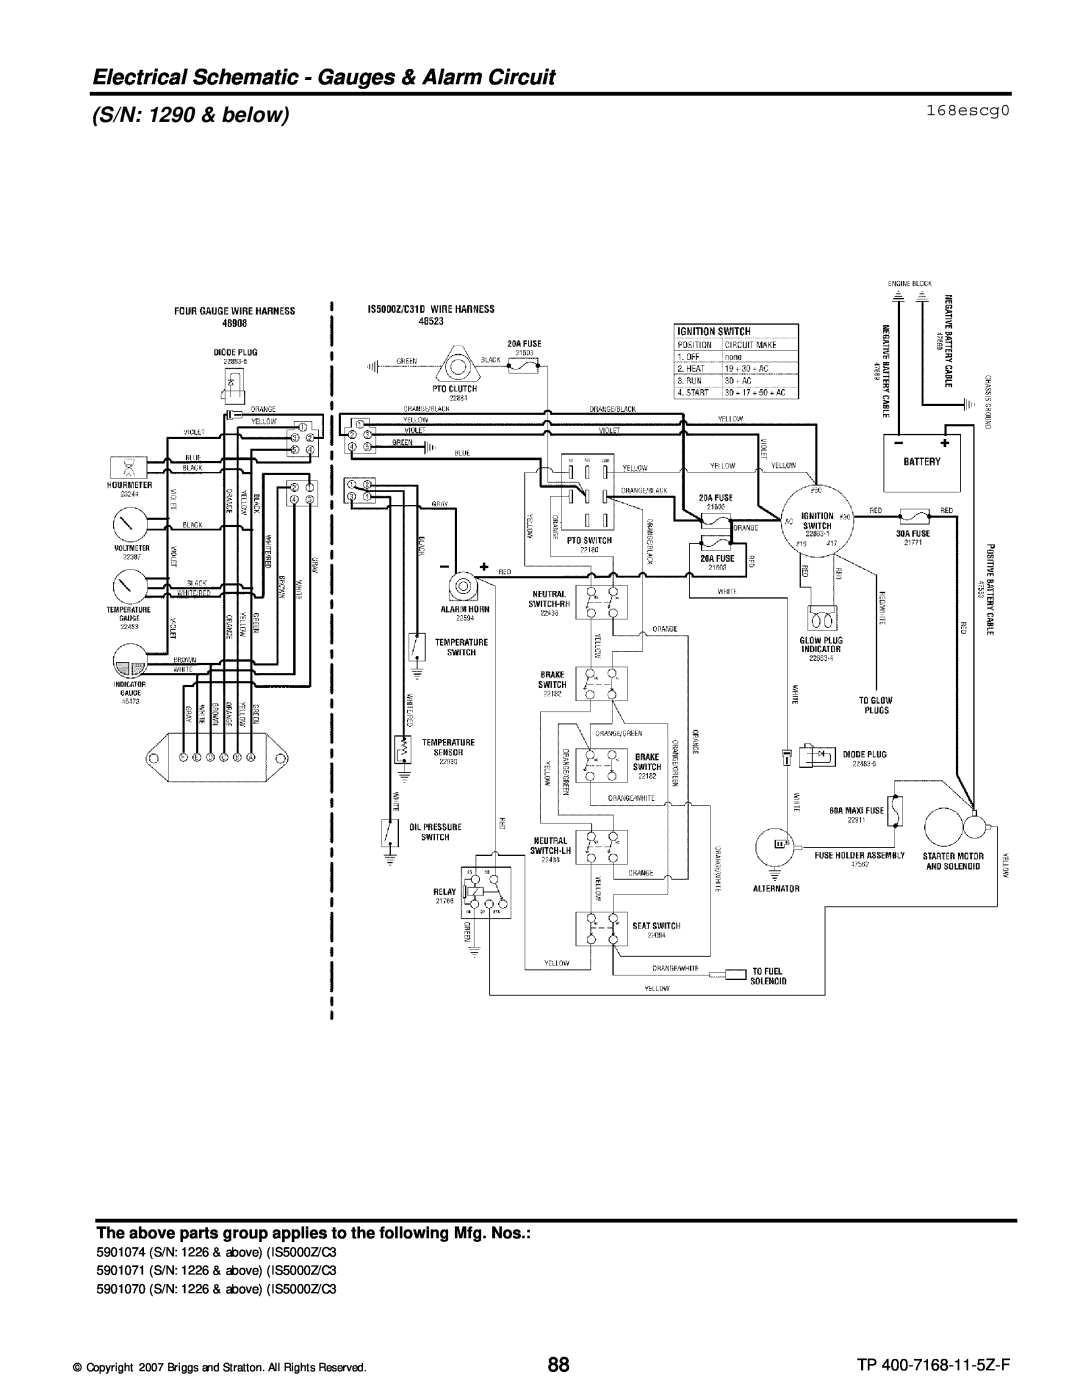 Briggs & Stratton 5901070 Electrical Schematic - Gauges & Alarm Circuit, 168escg0, S/N 1290 & below, TP 400-7168-11-5Z-F 